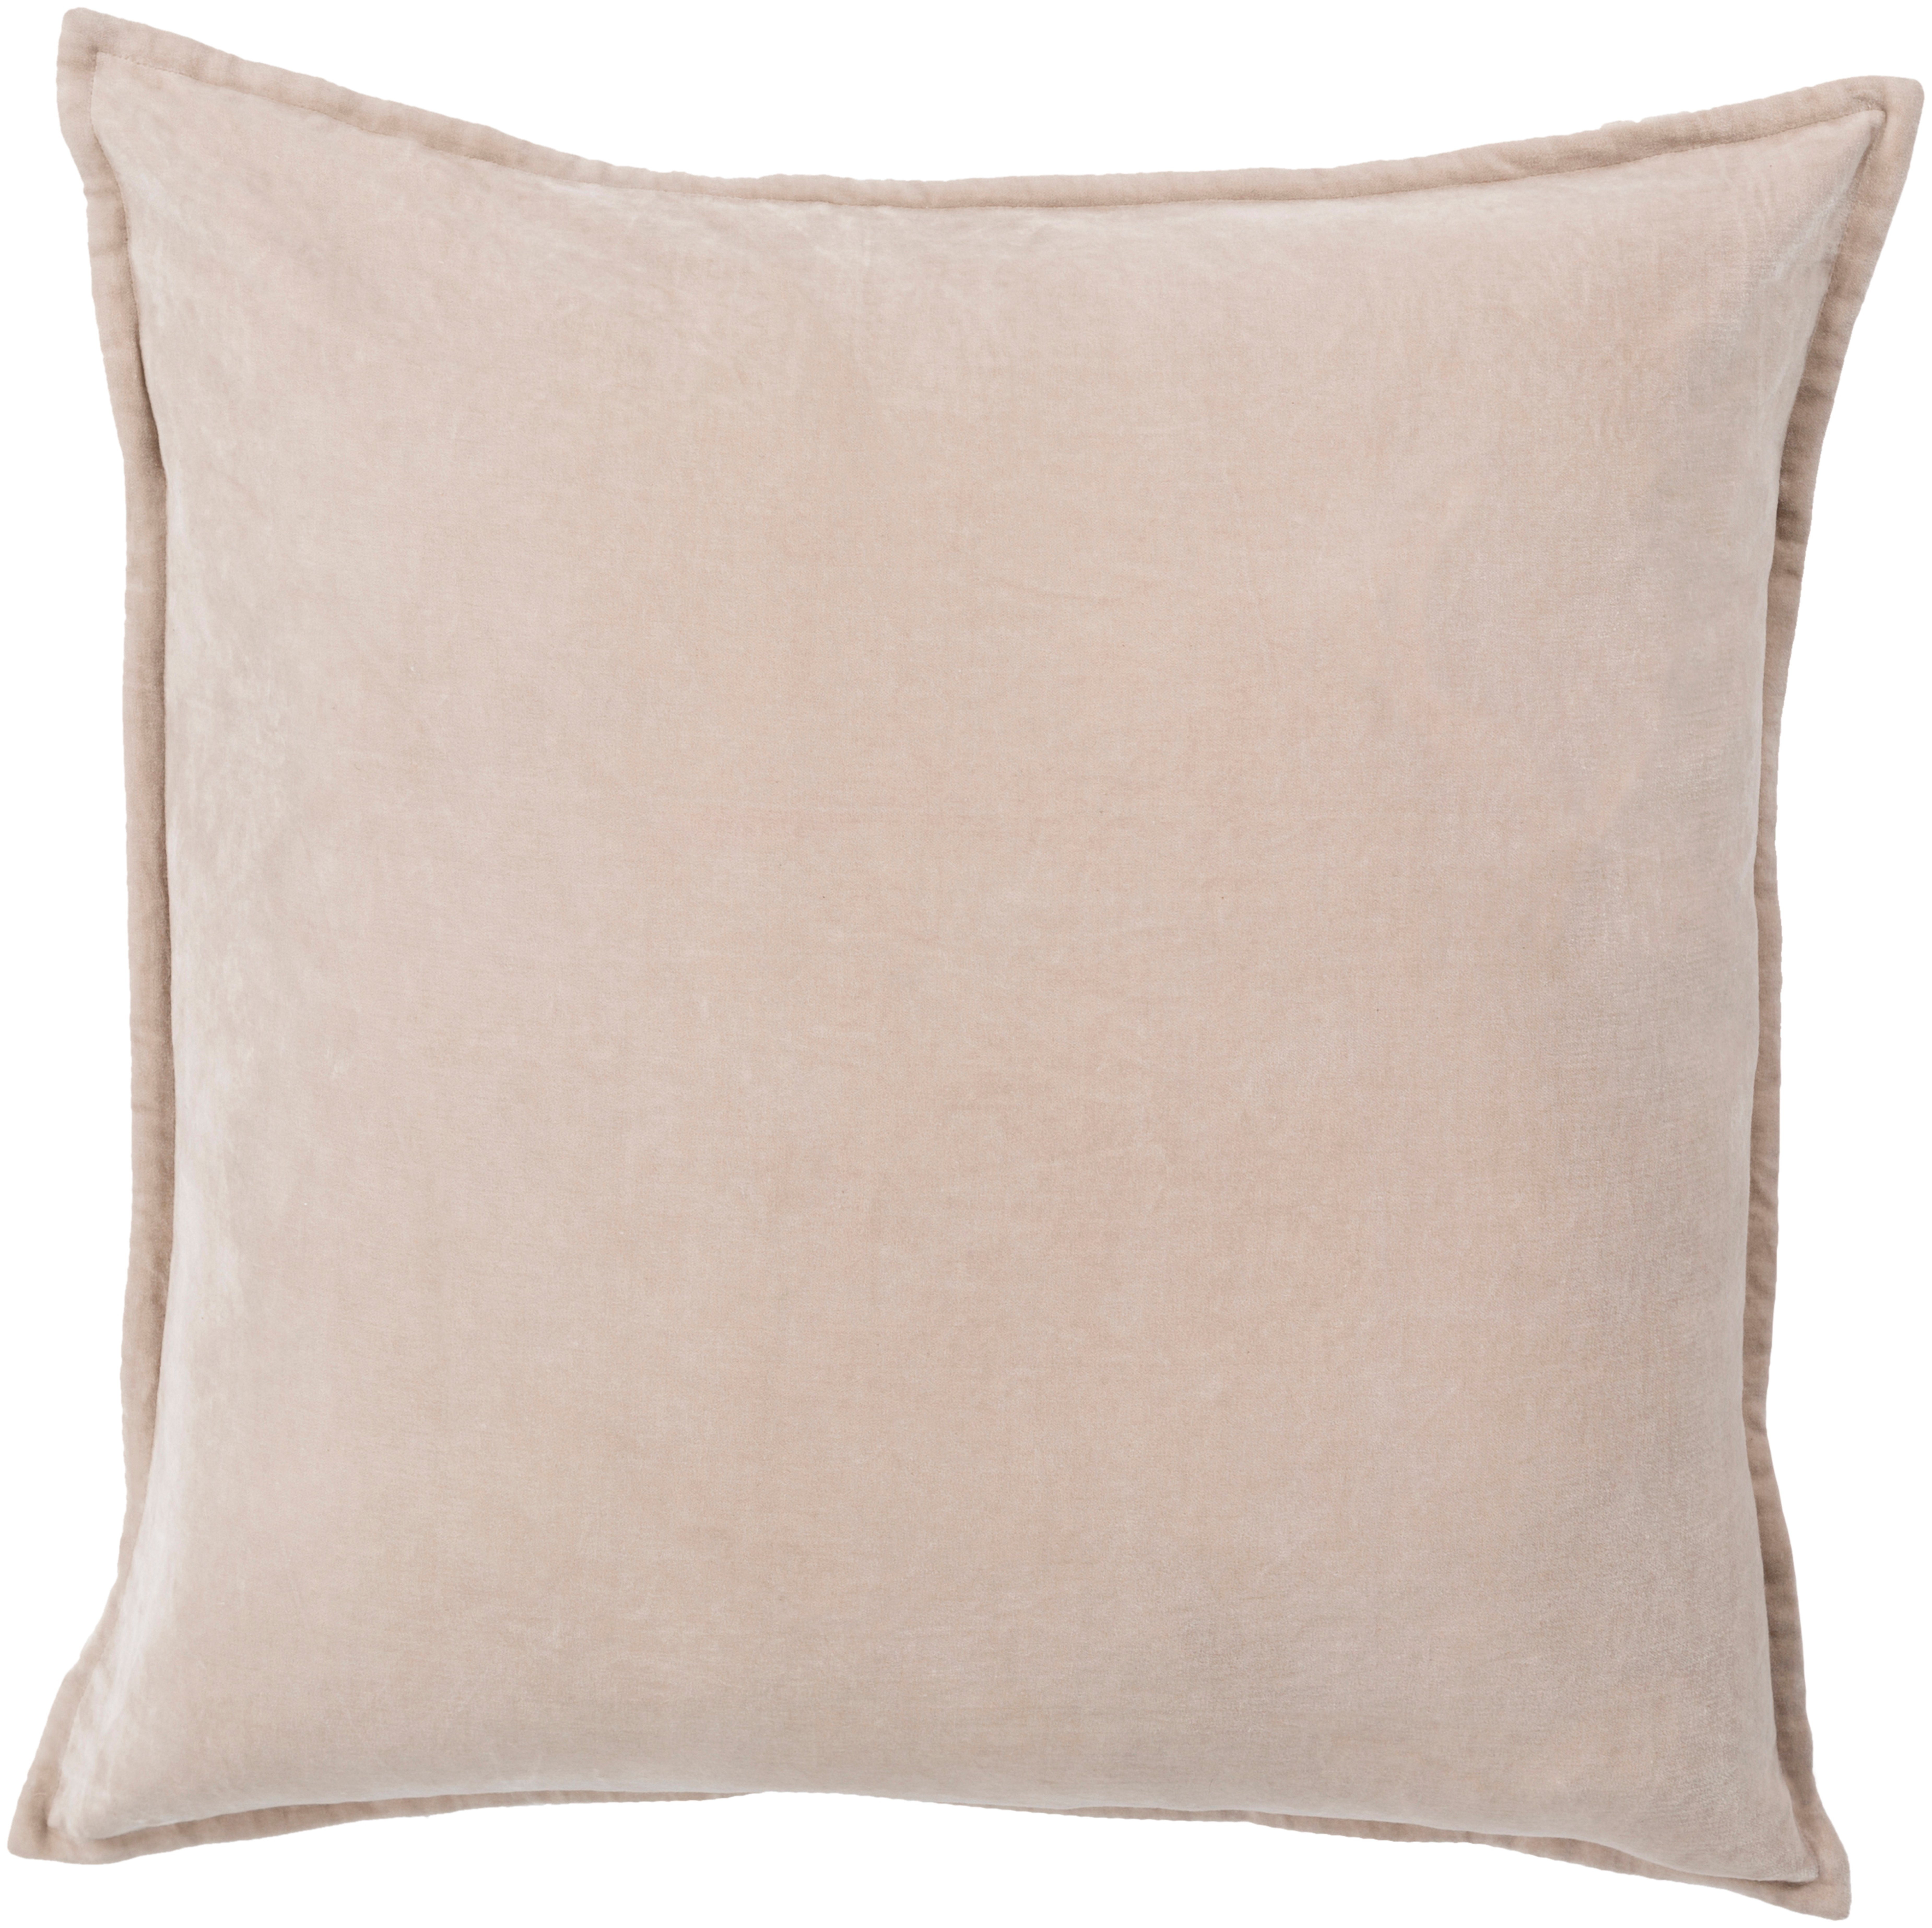 Cotton Velvet Throw Pillow, 22" x 22", with poly insert - Surya